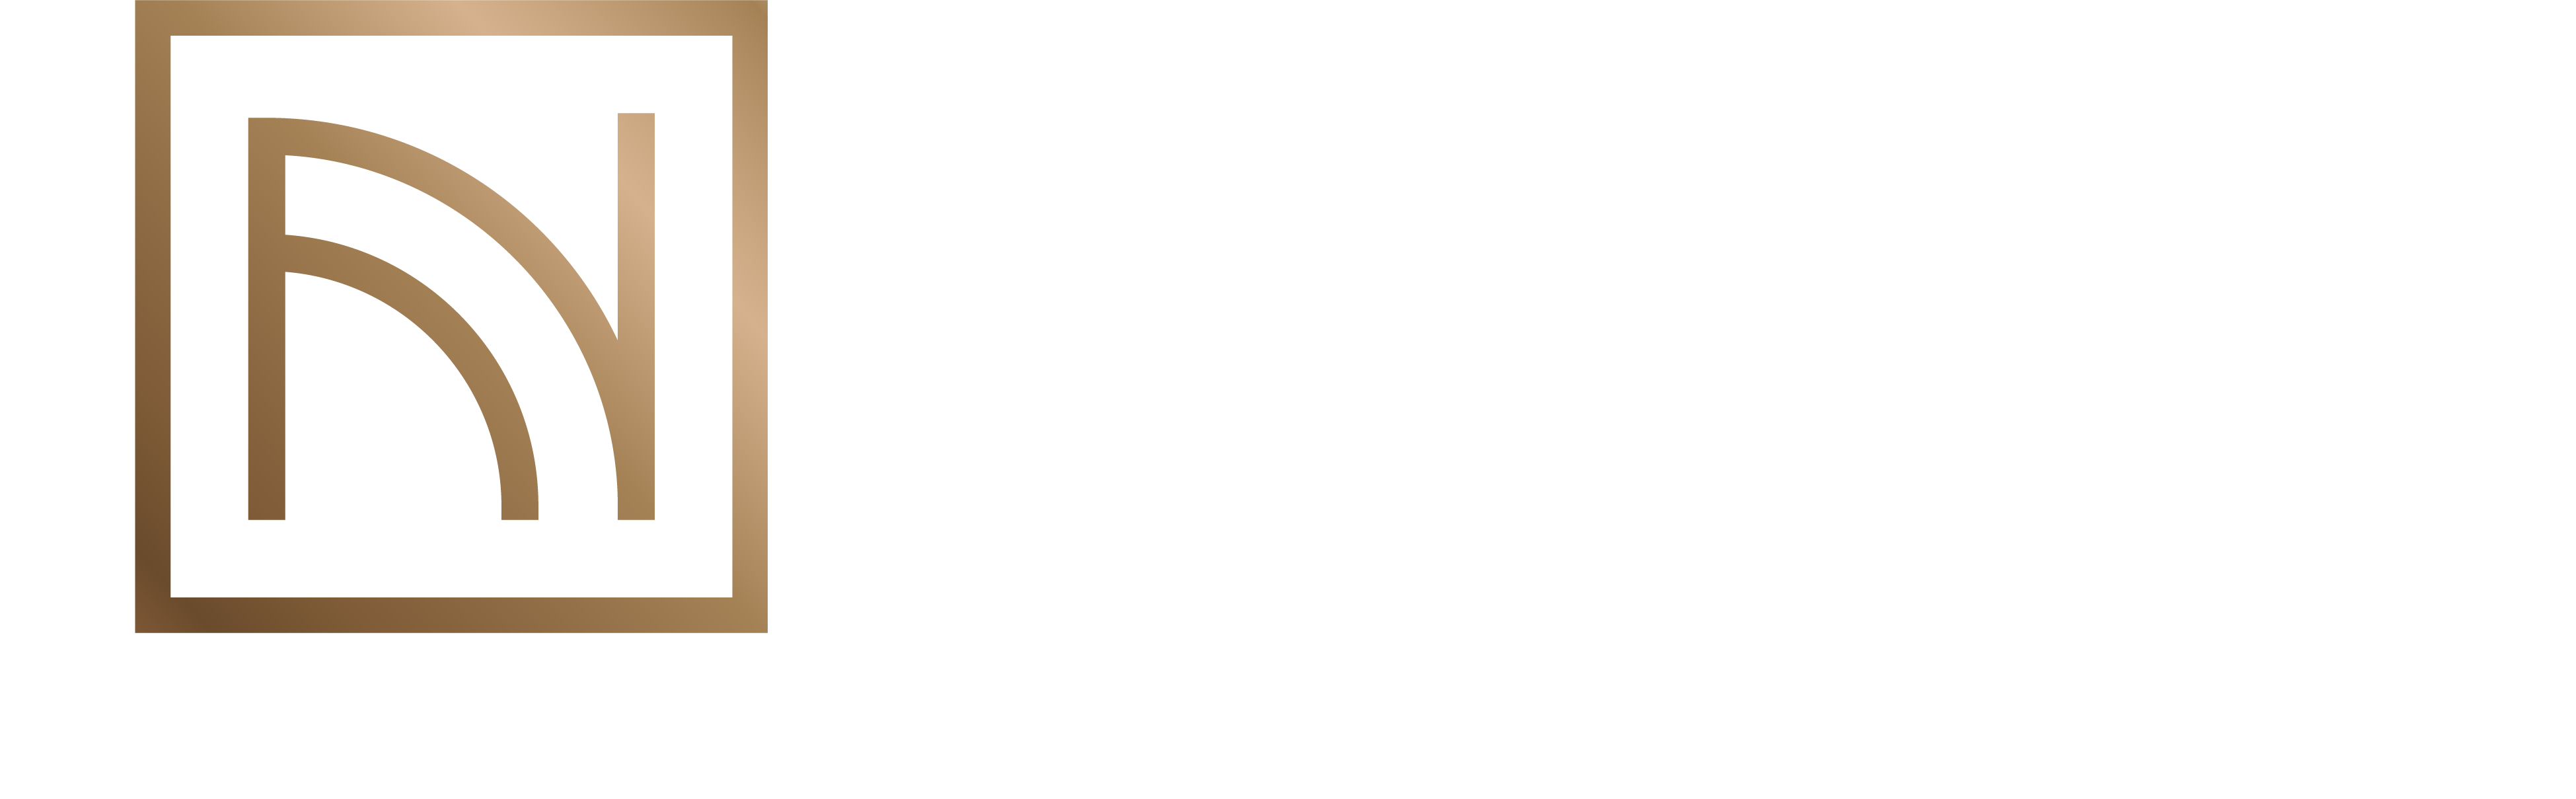 INCASE Fux – International Careful Art Services Logo